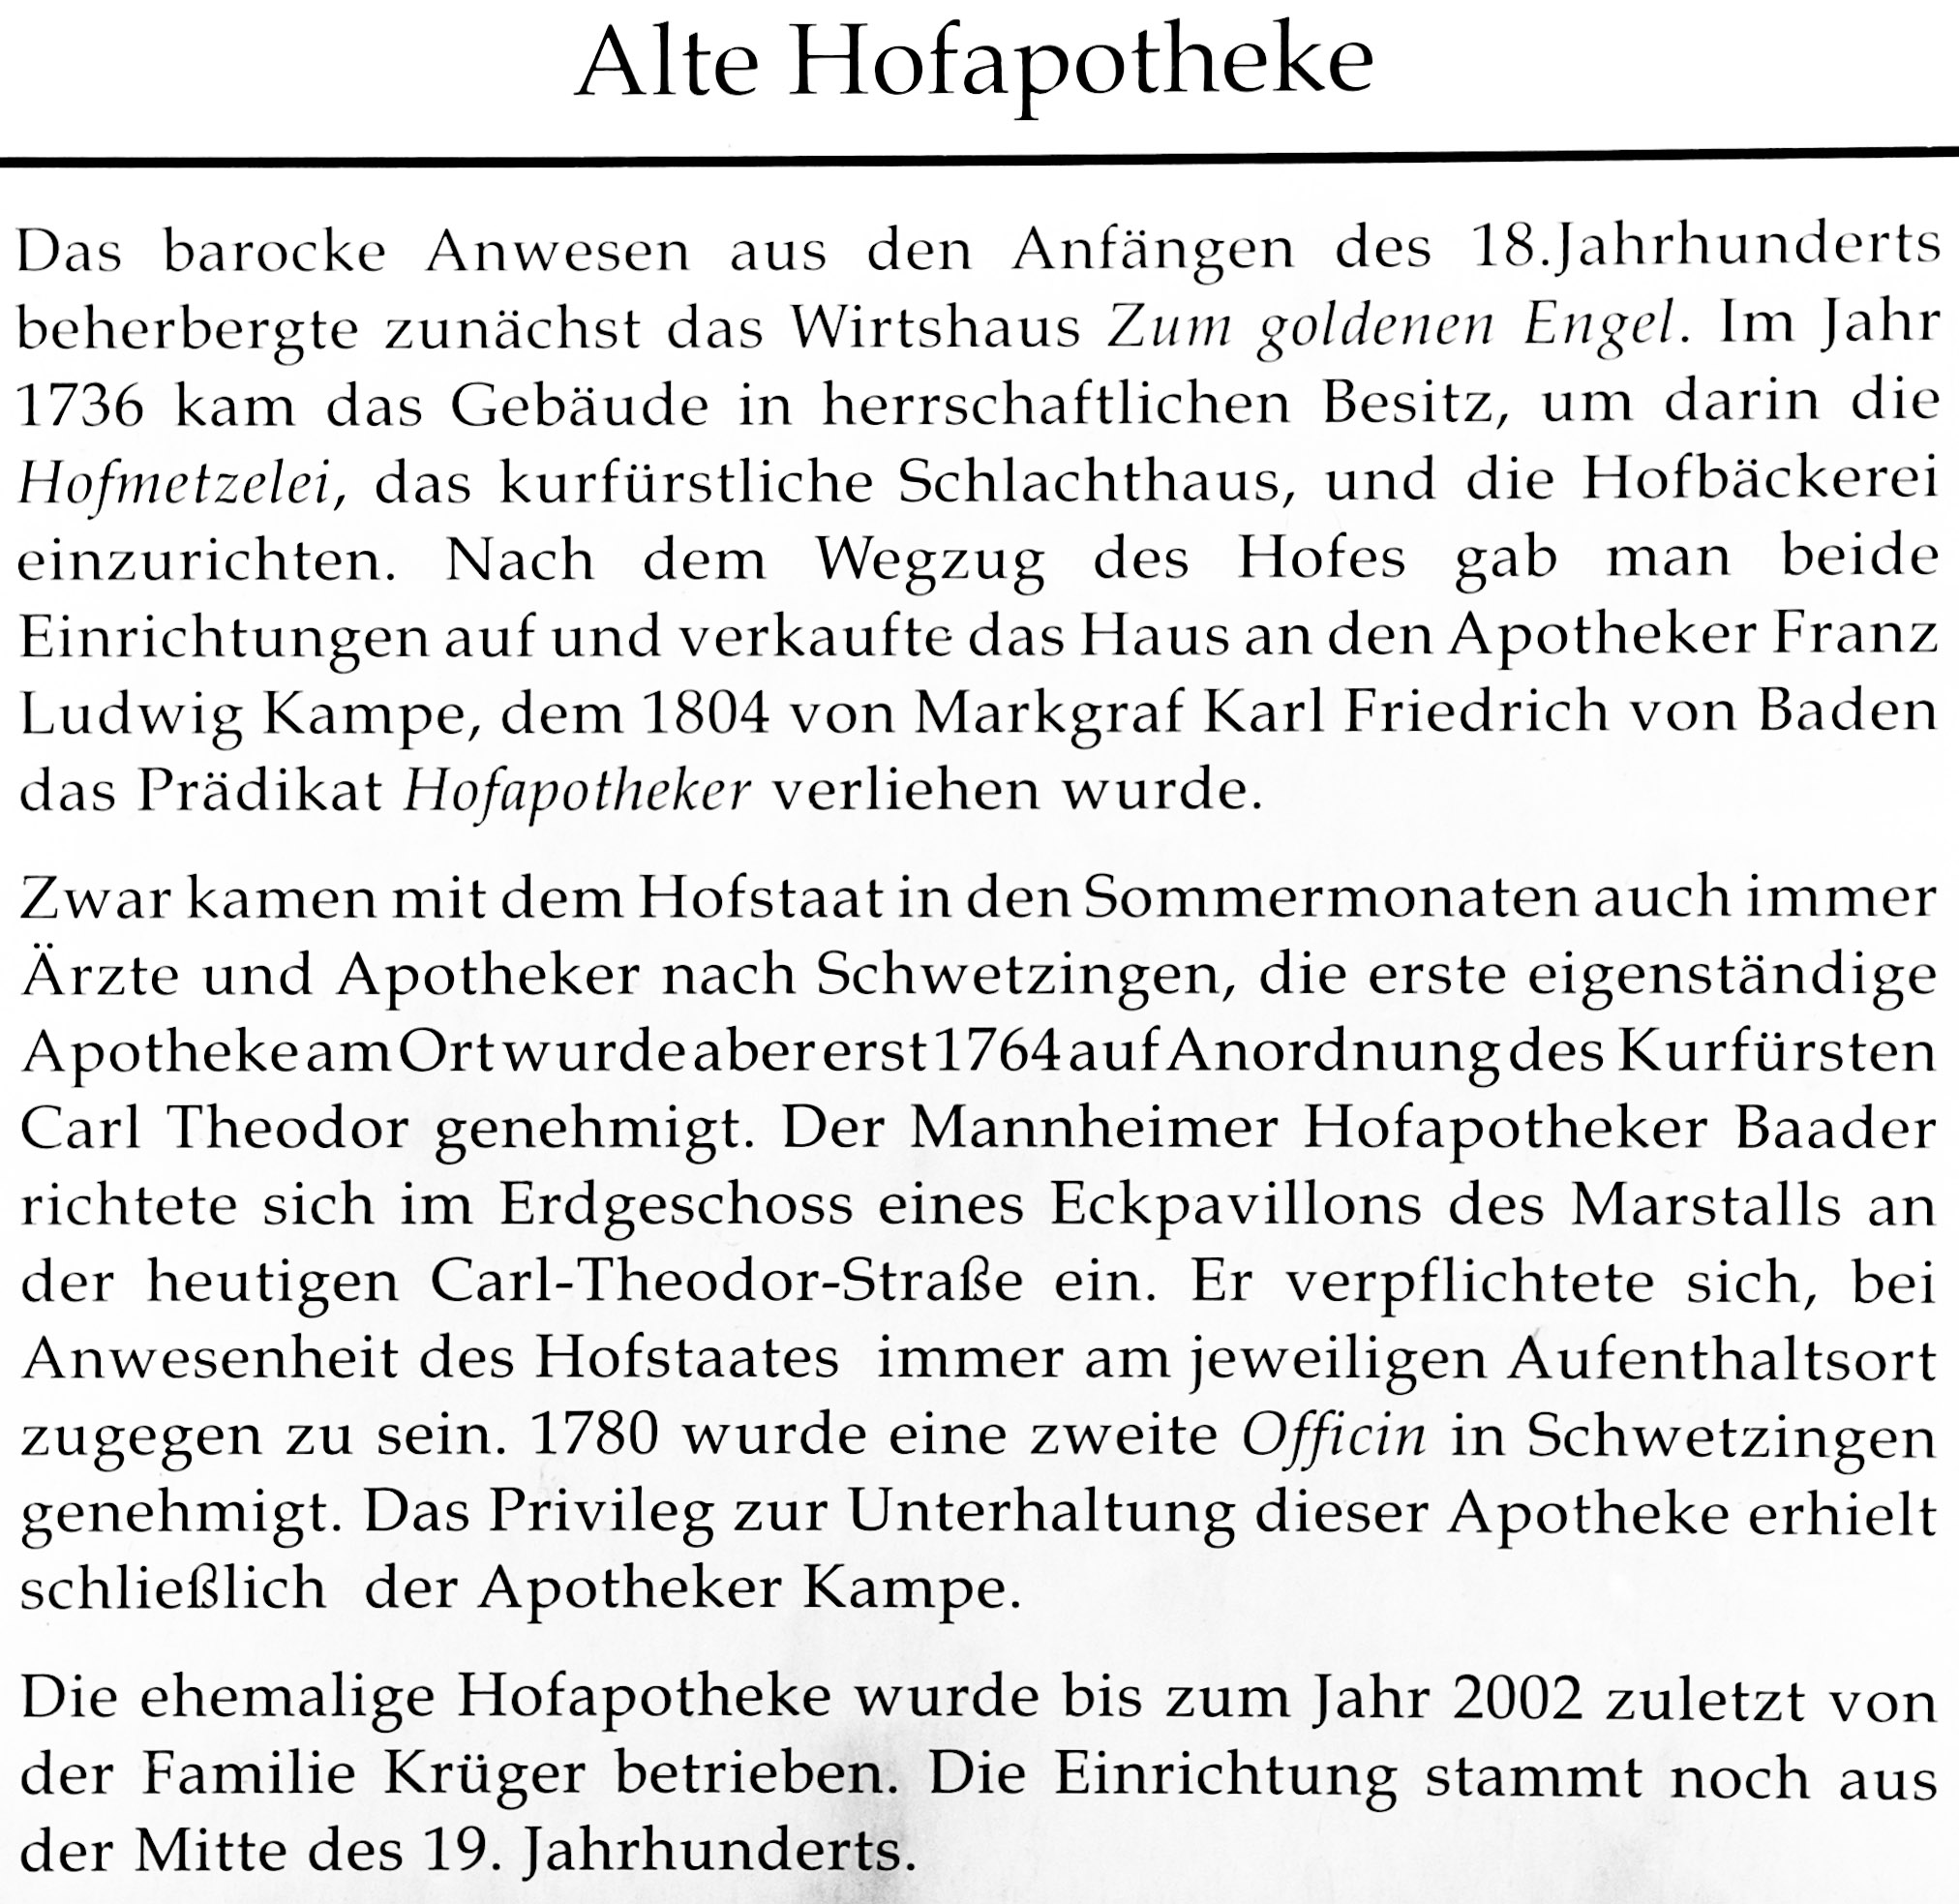 Datei:Infotafel Alte Hofapotheke Schwetzingen.jpg